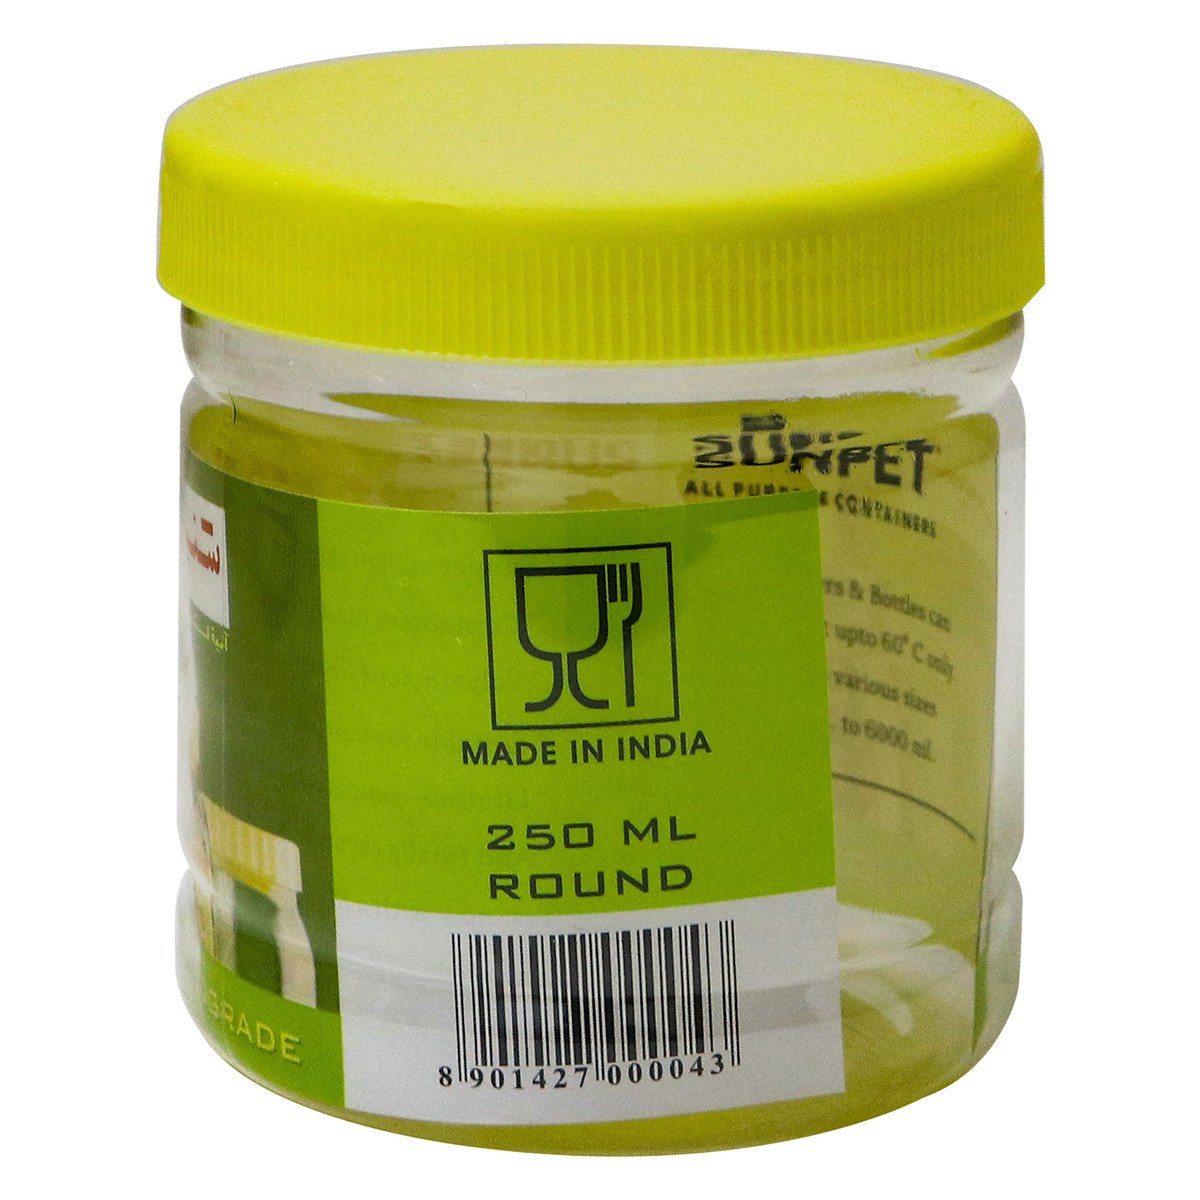 Sunpet Plastic Jar 250ml